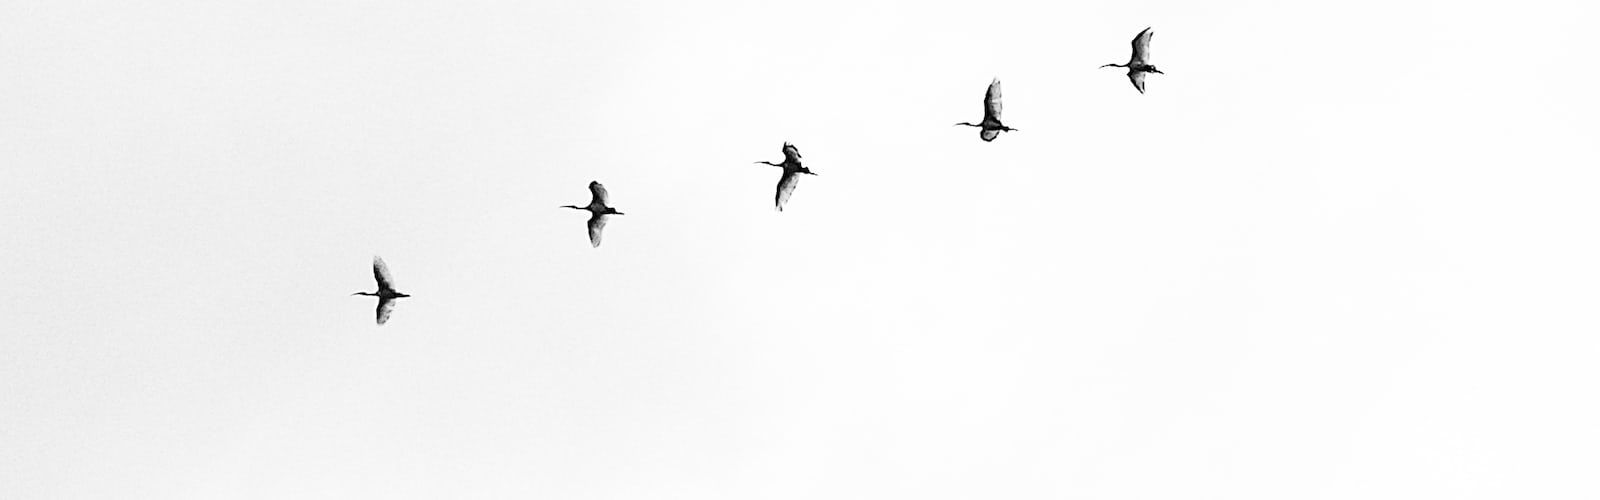 Five birds flying in the sky. - Minimalist